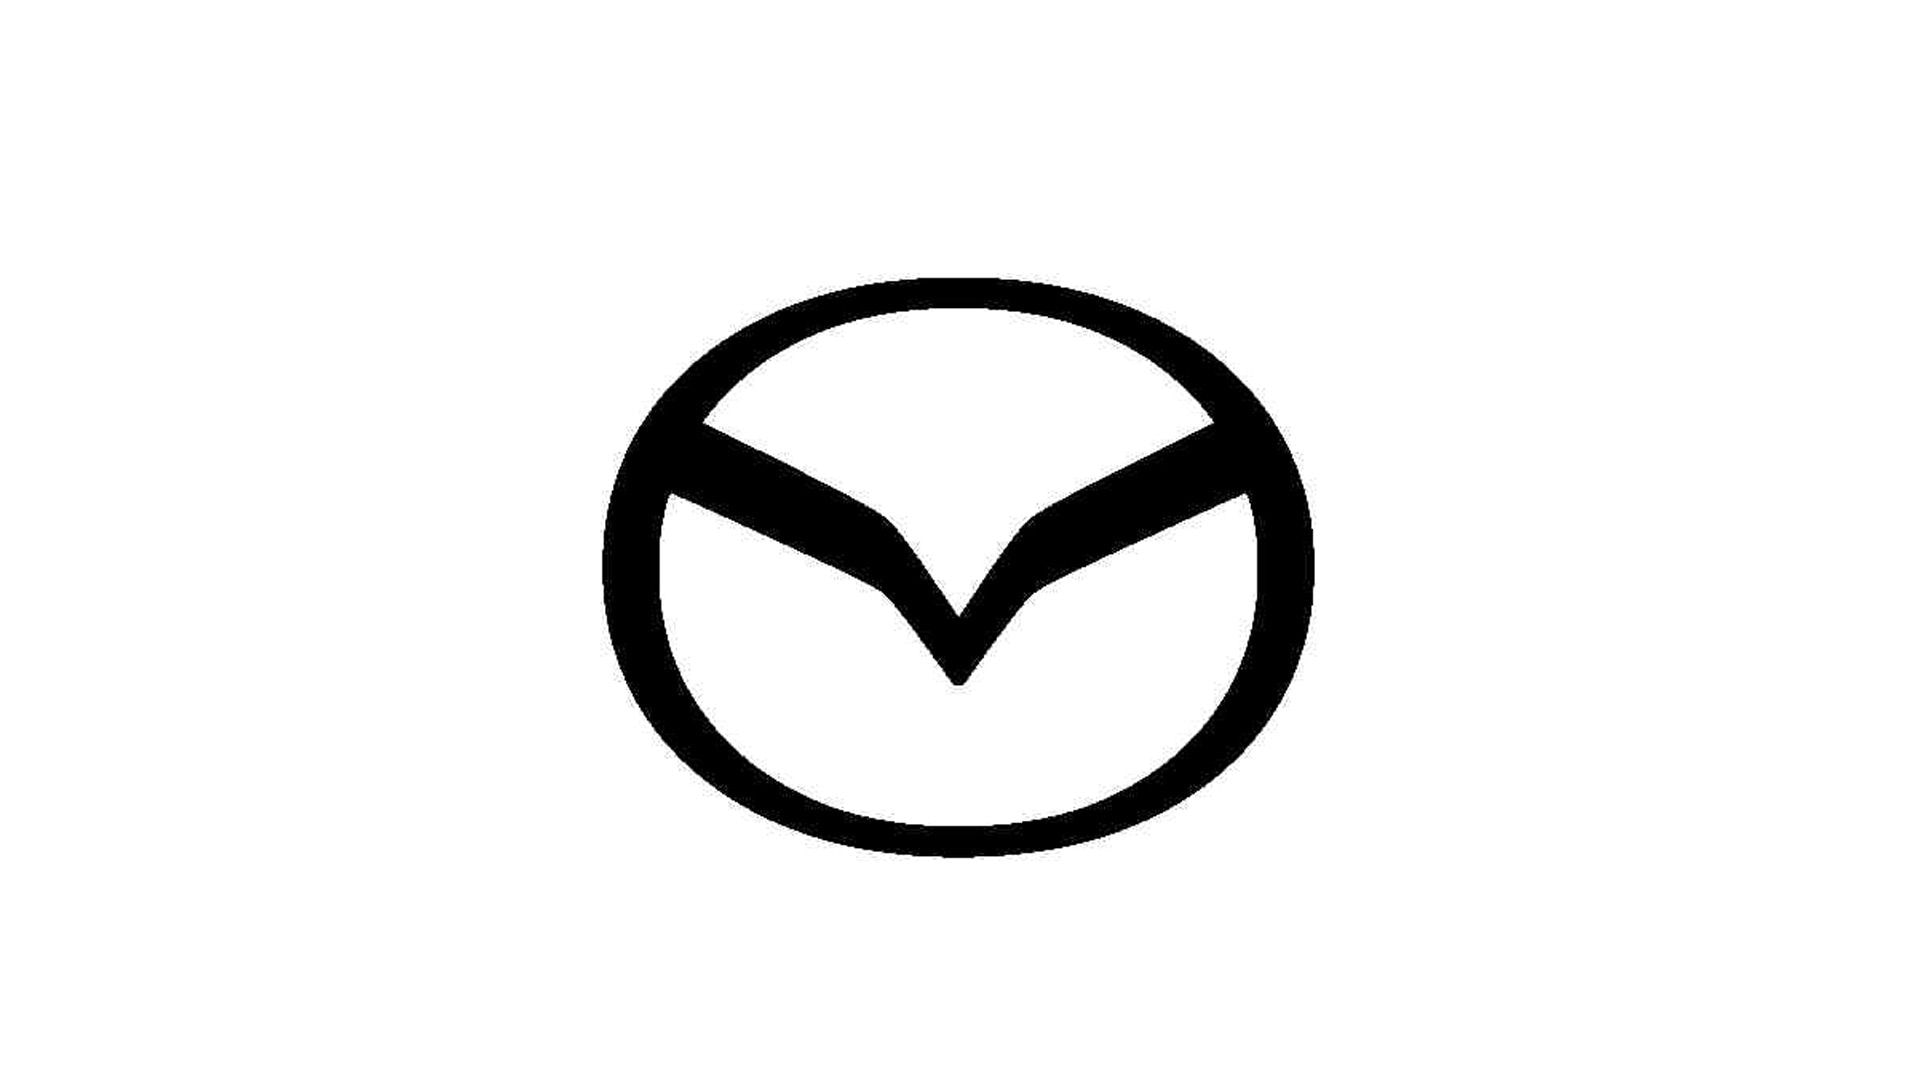 Trademark filing for revised Mazda logo - Photo via Chizai Watch